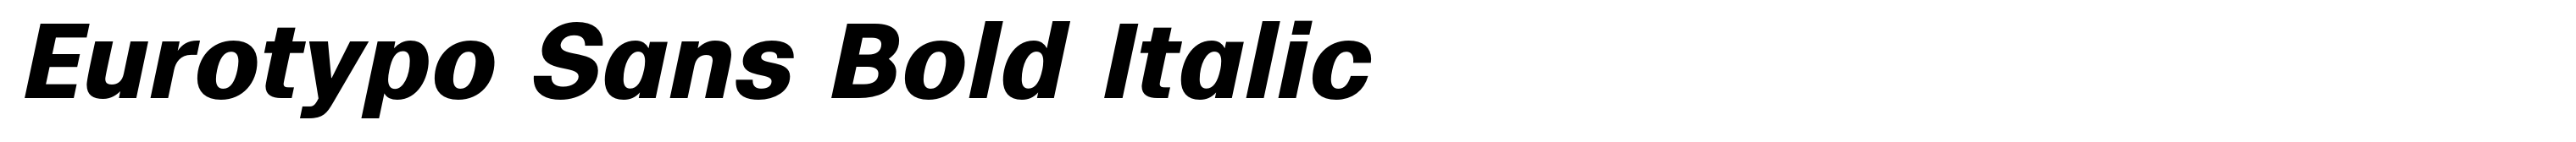 Eurotypo Sans Bold Italic